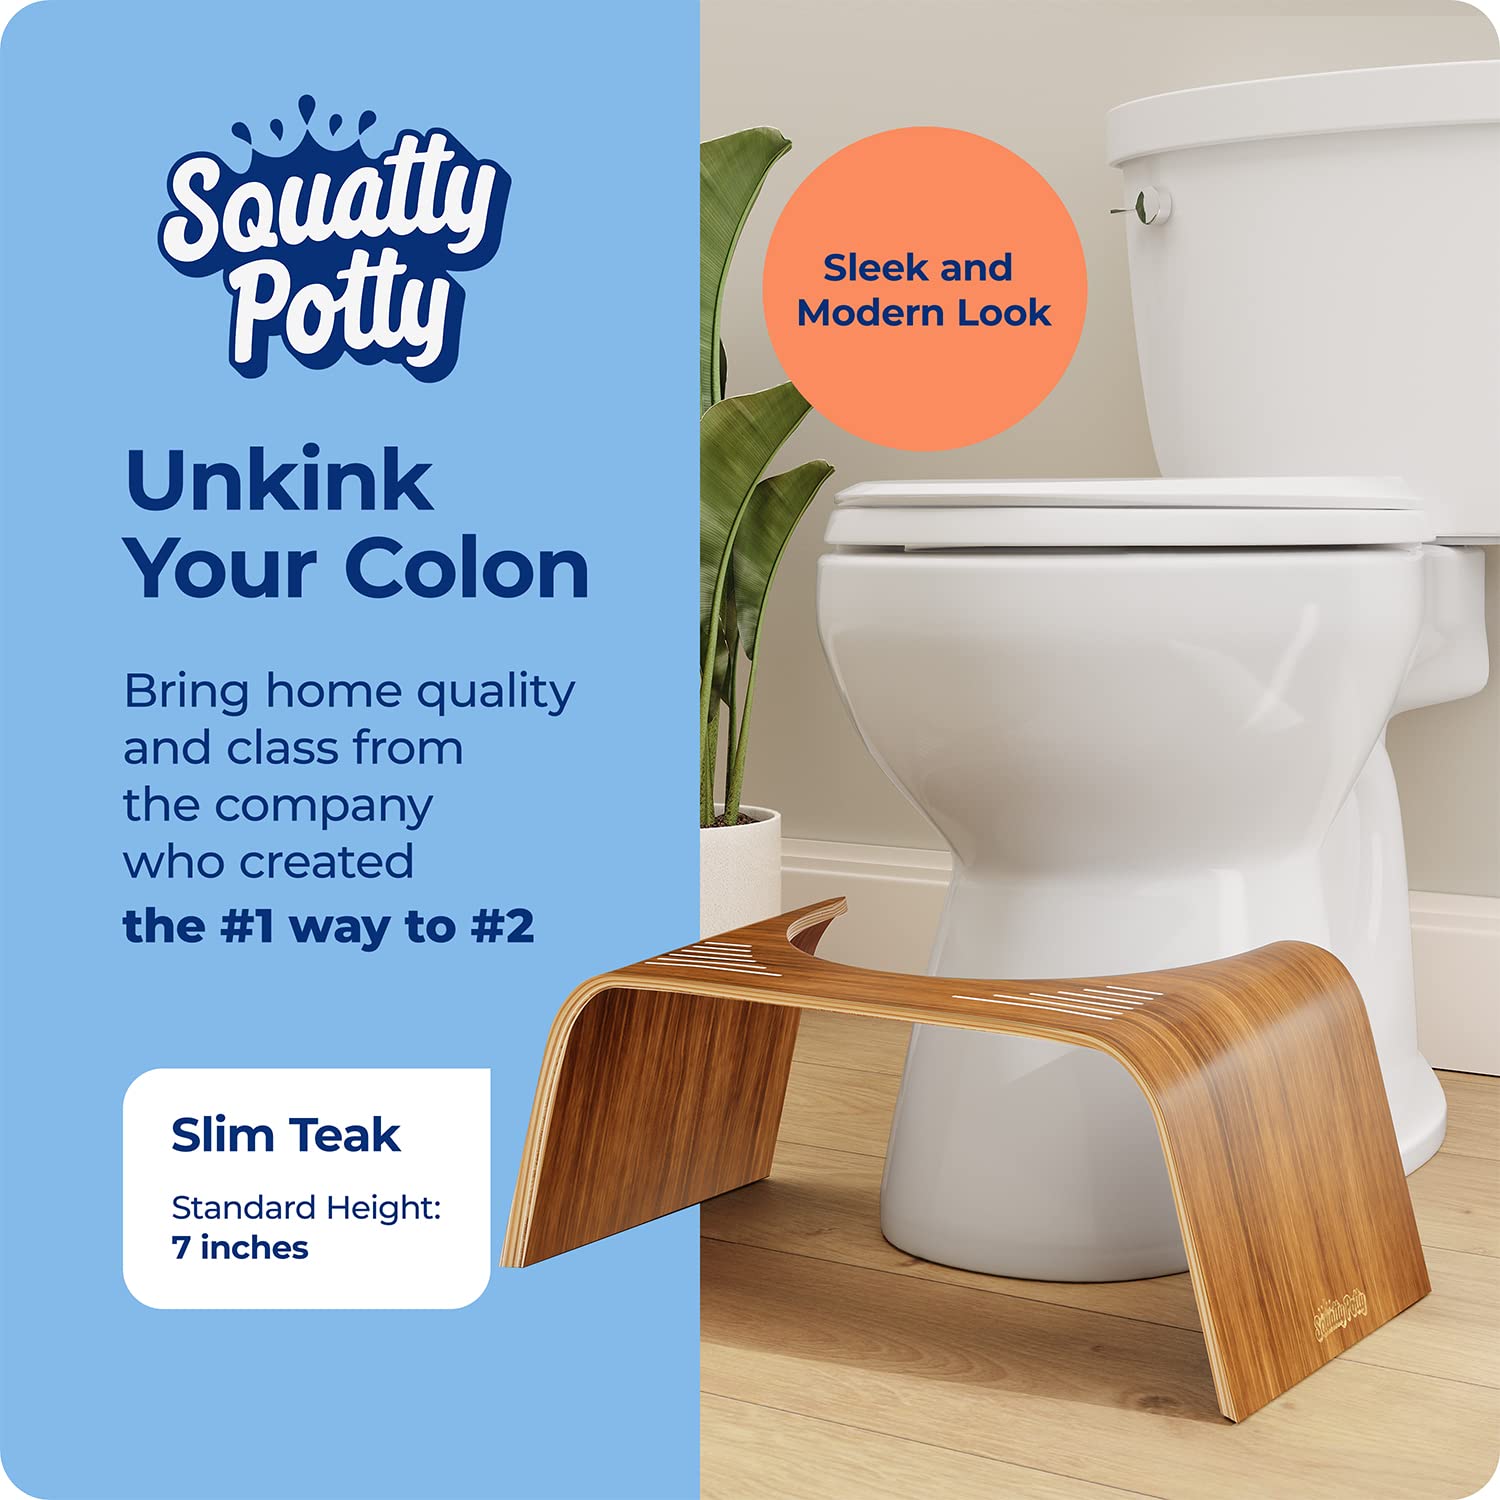 Squatty Potty The Original Bathroom Toilet Stool - Slim Teak Finish, 7 inch Height